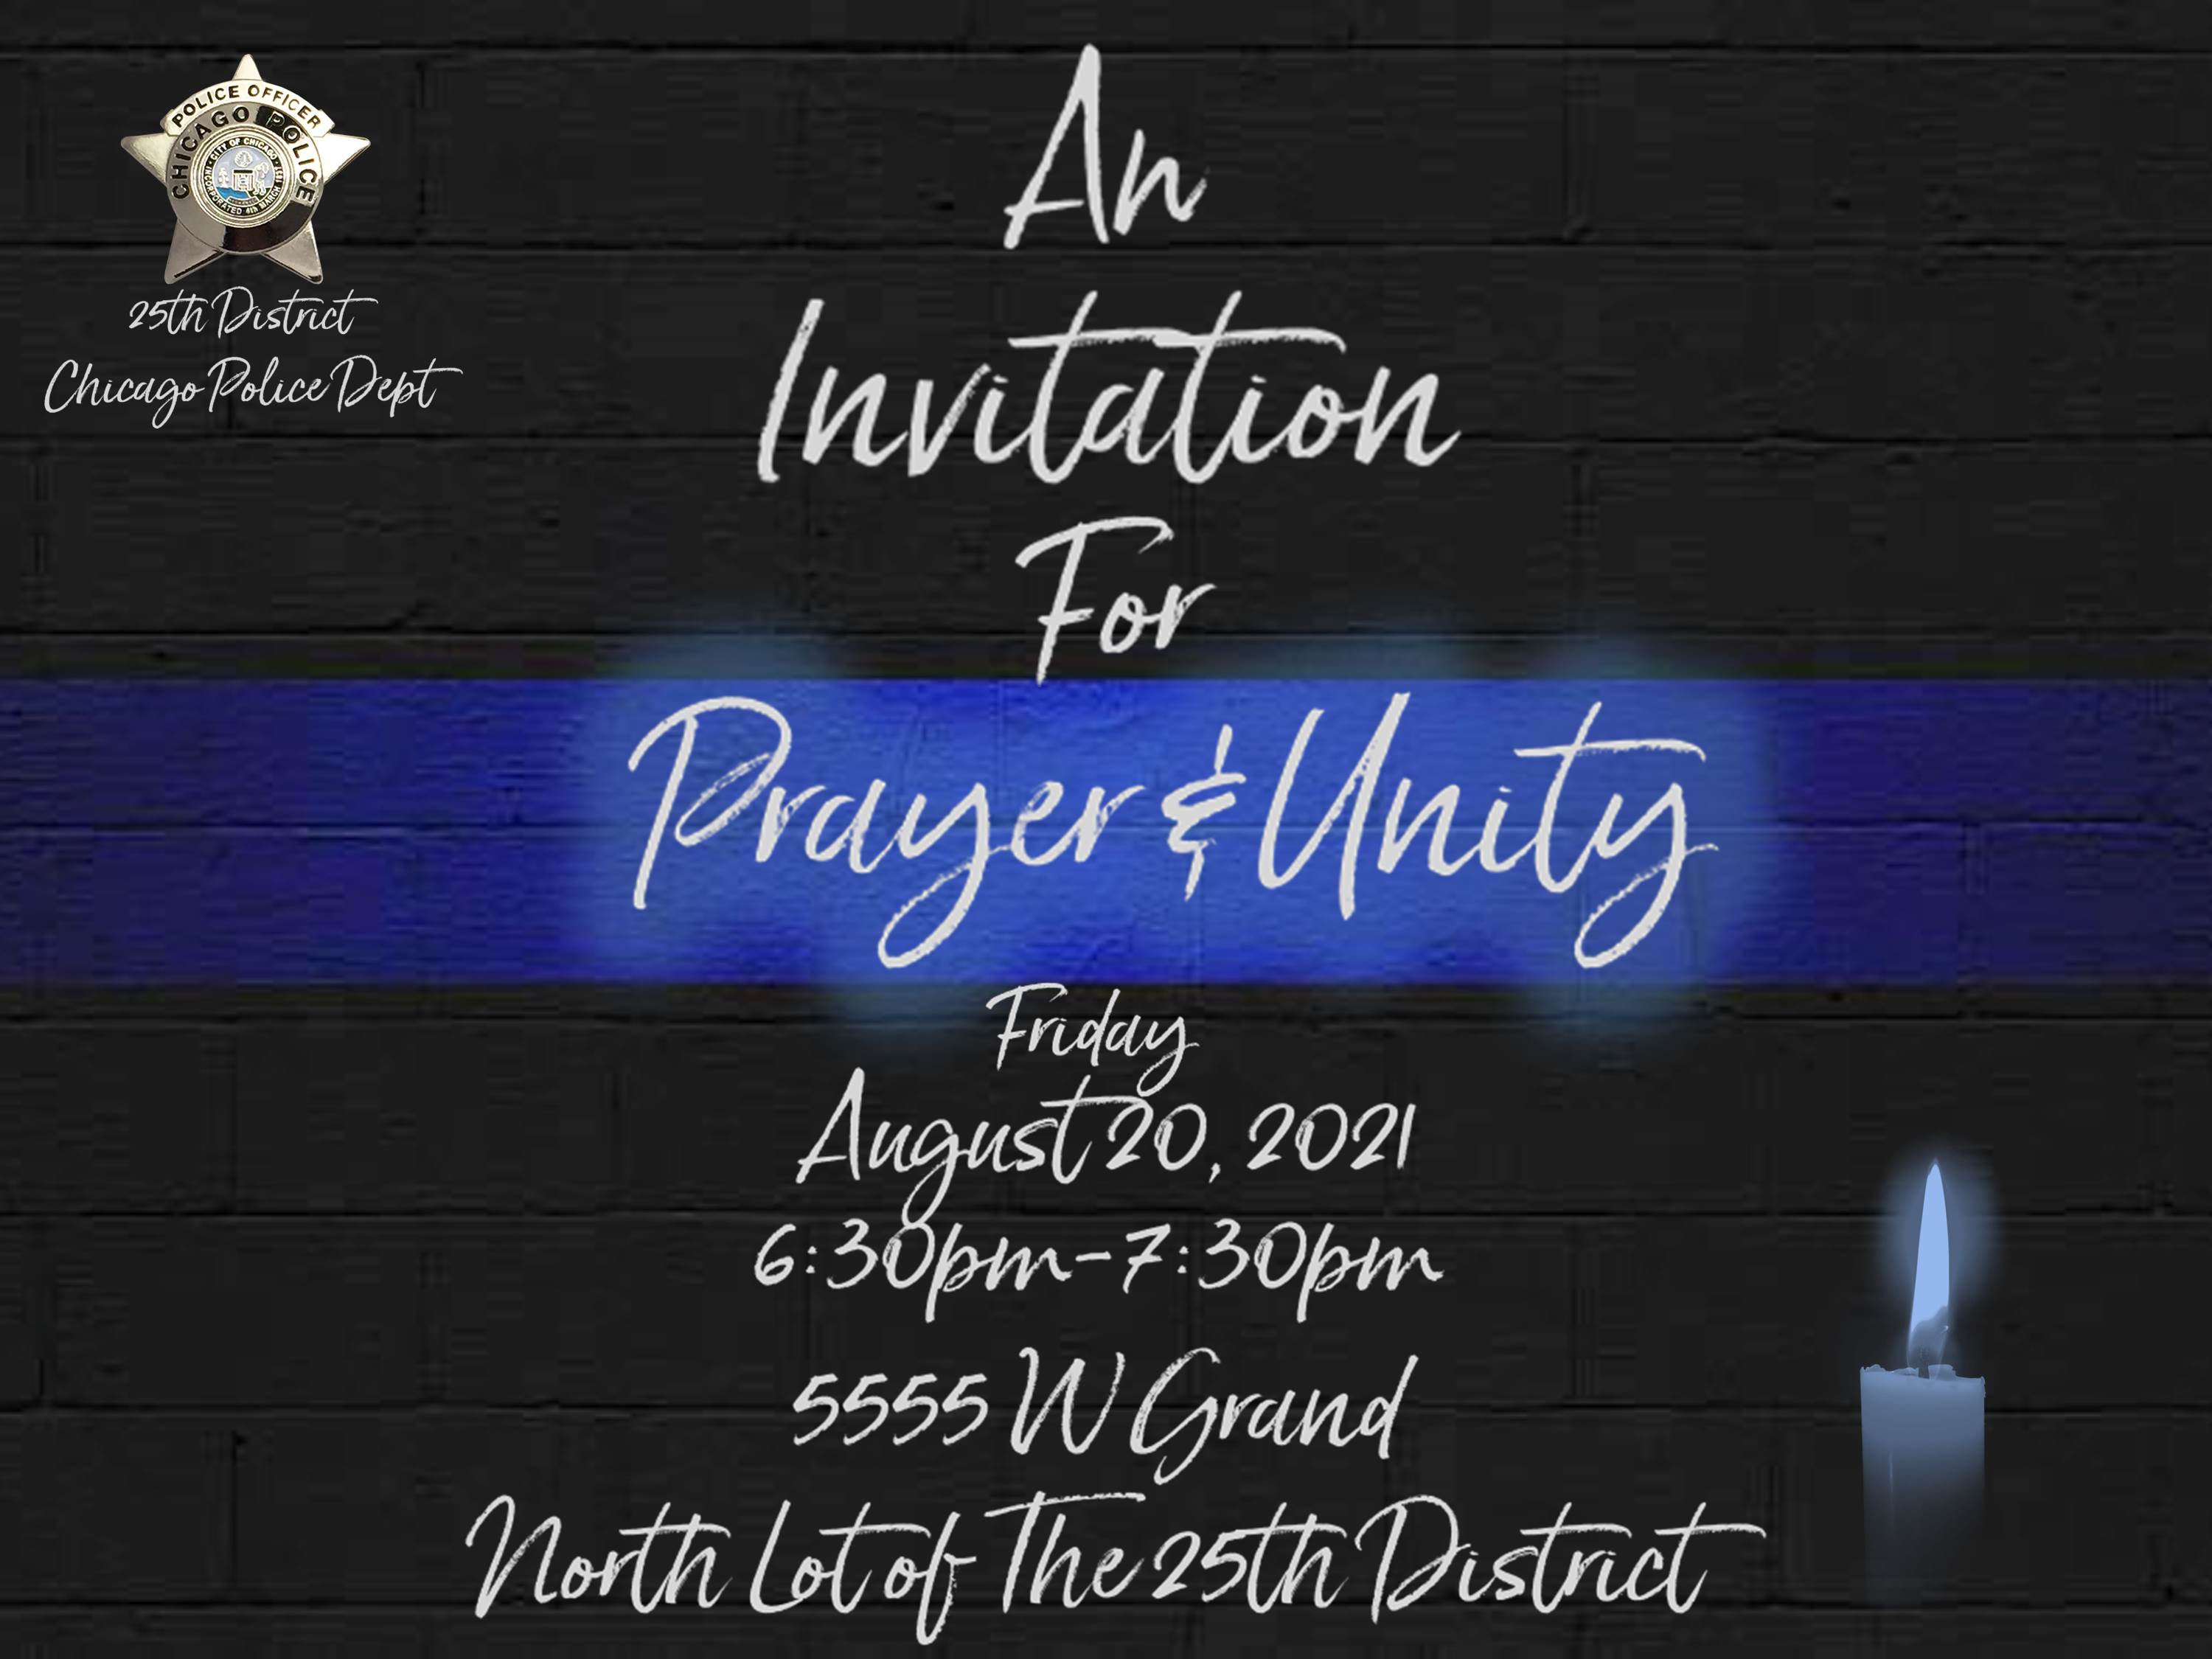 Prayer Vigil - 25th District CPD Headquarters